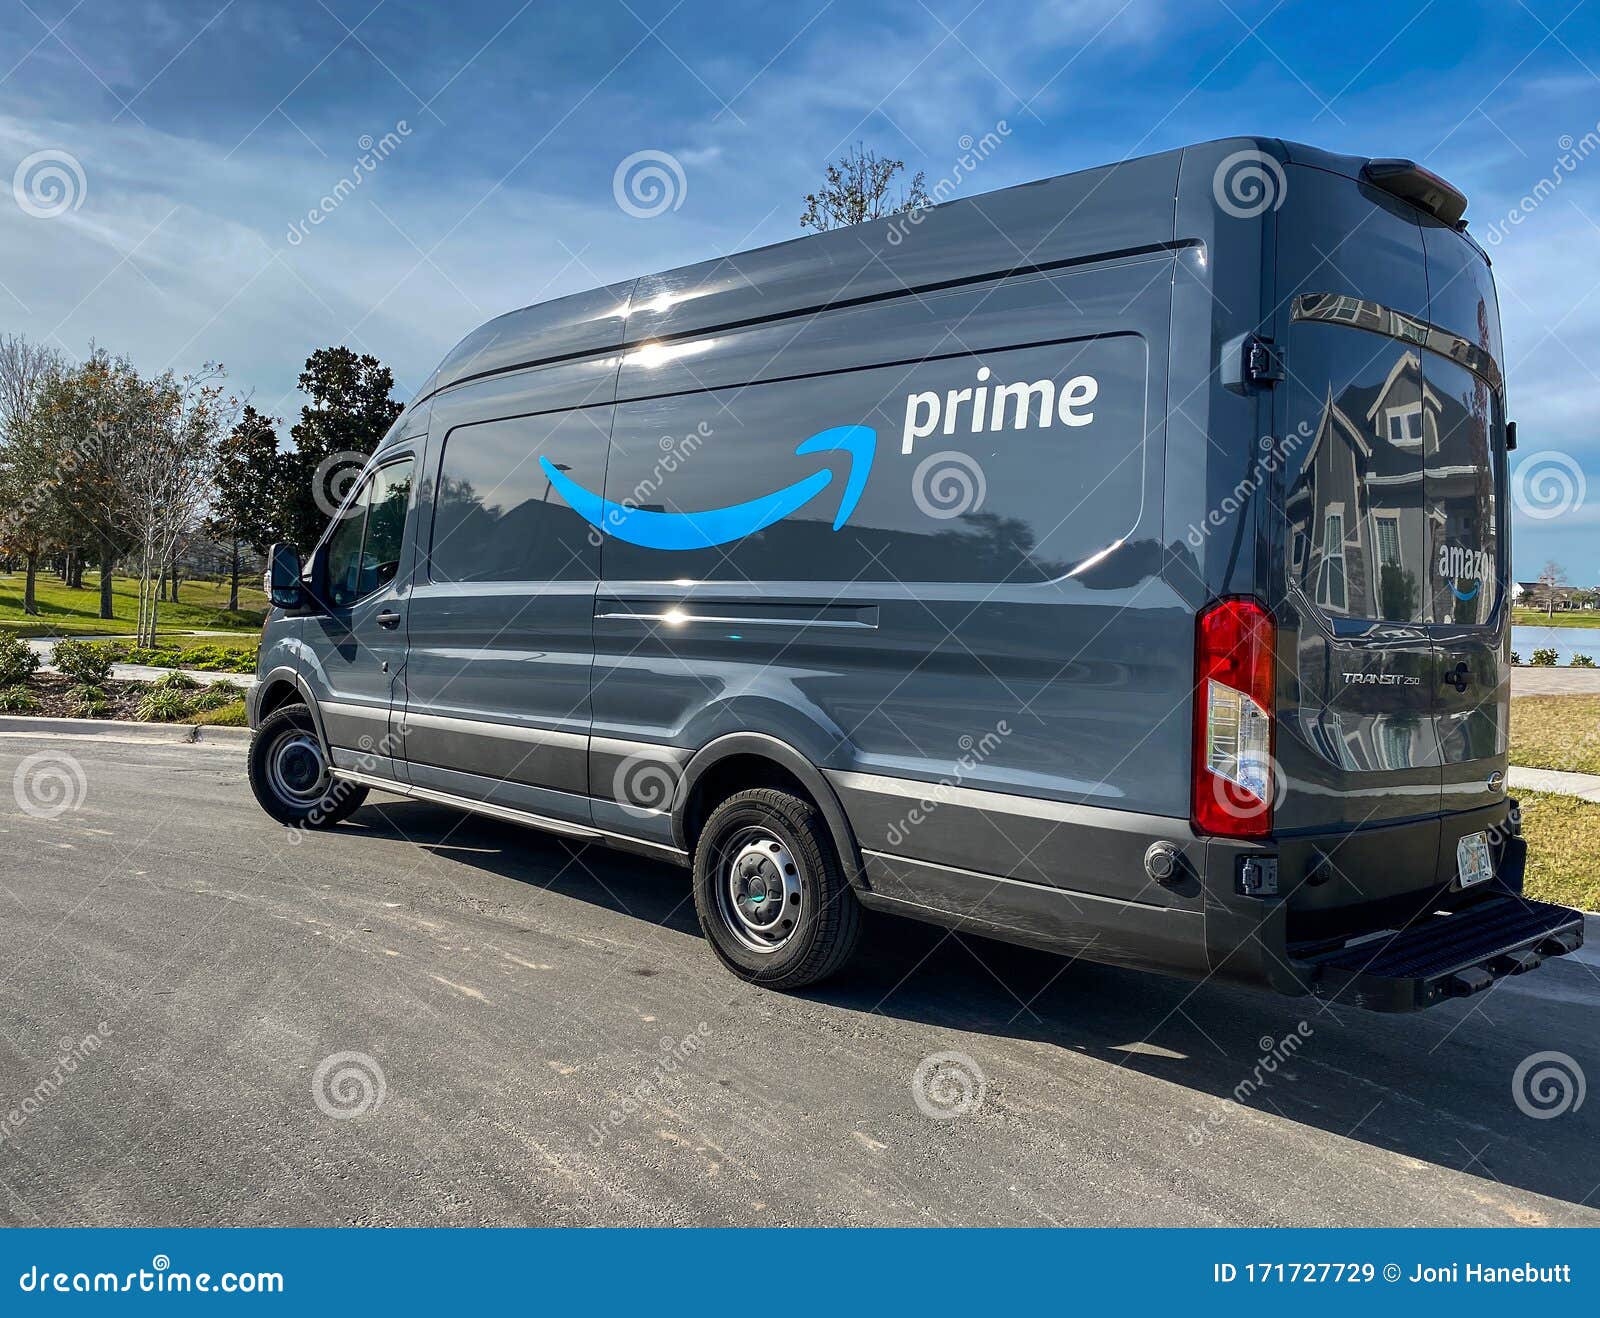 Amazon Prime Van Photos Free Royalty Free Stock Photos From Dreamstime